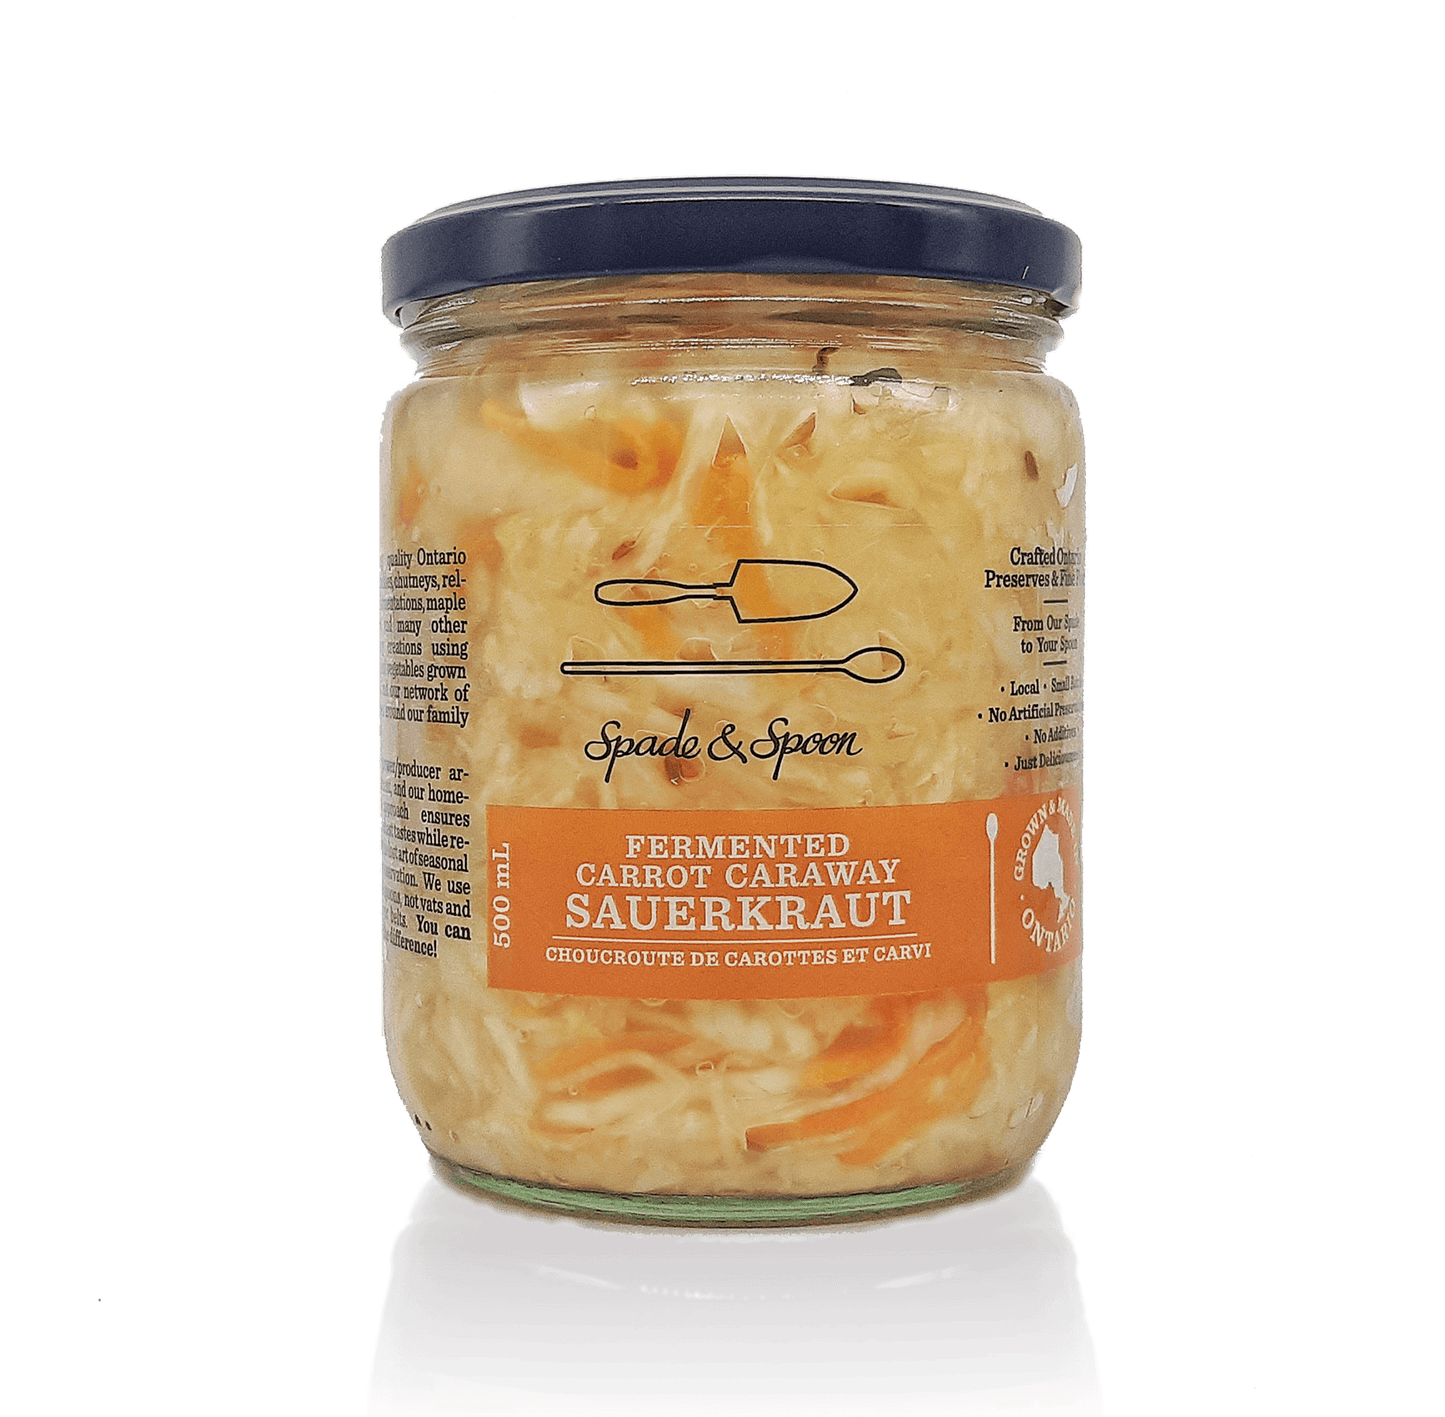 Fermented Carrot Caraway Sauerkraut - Spade & Spoon - Ontario Farm Goods